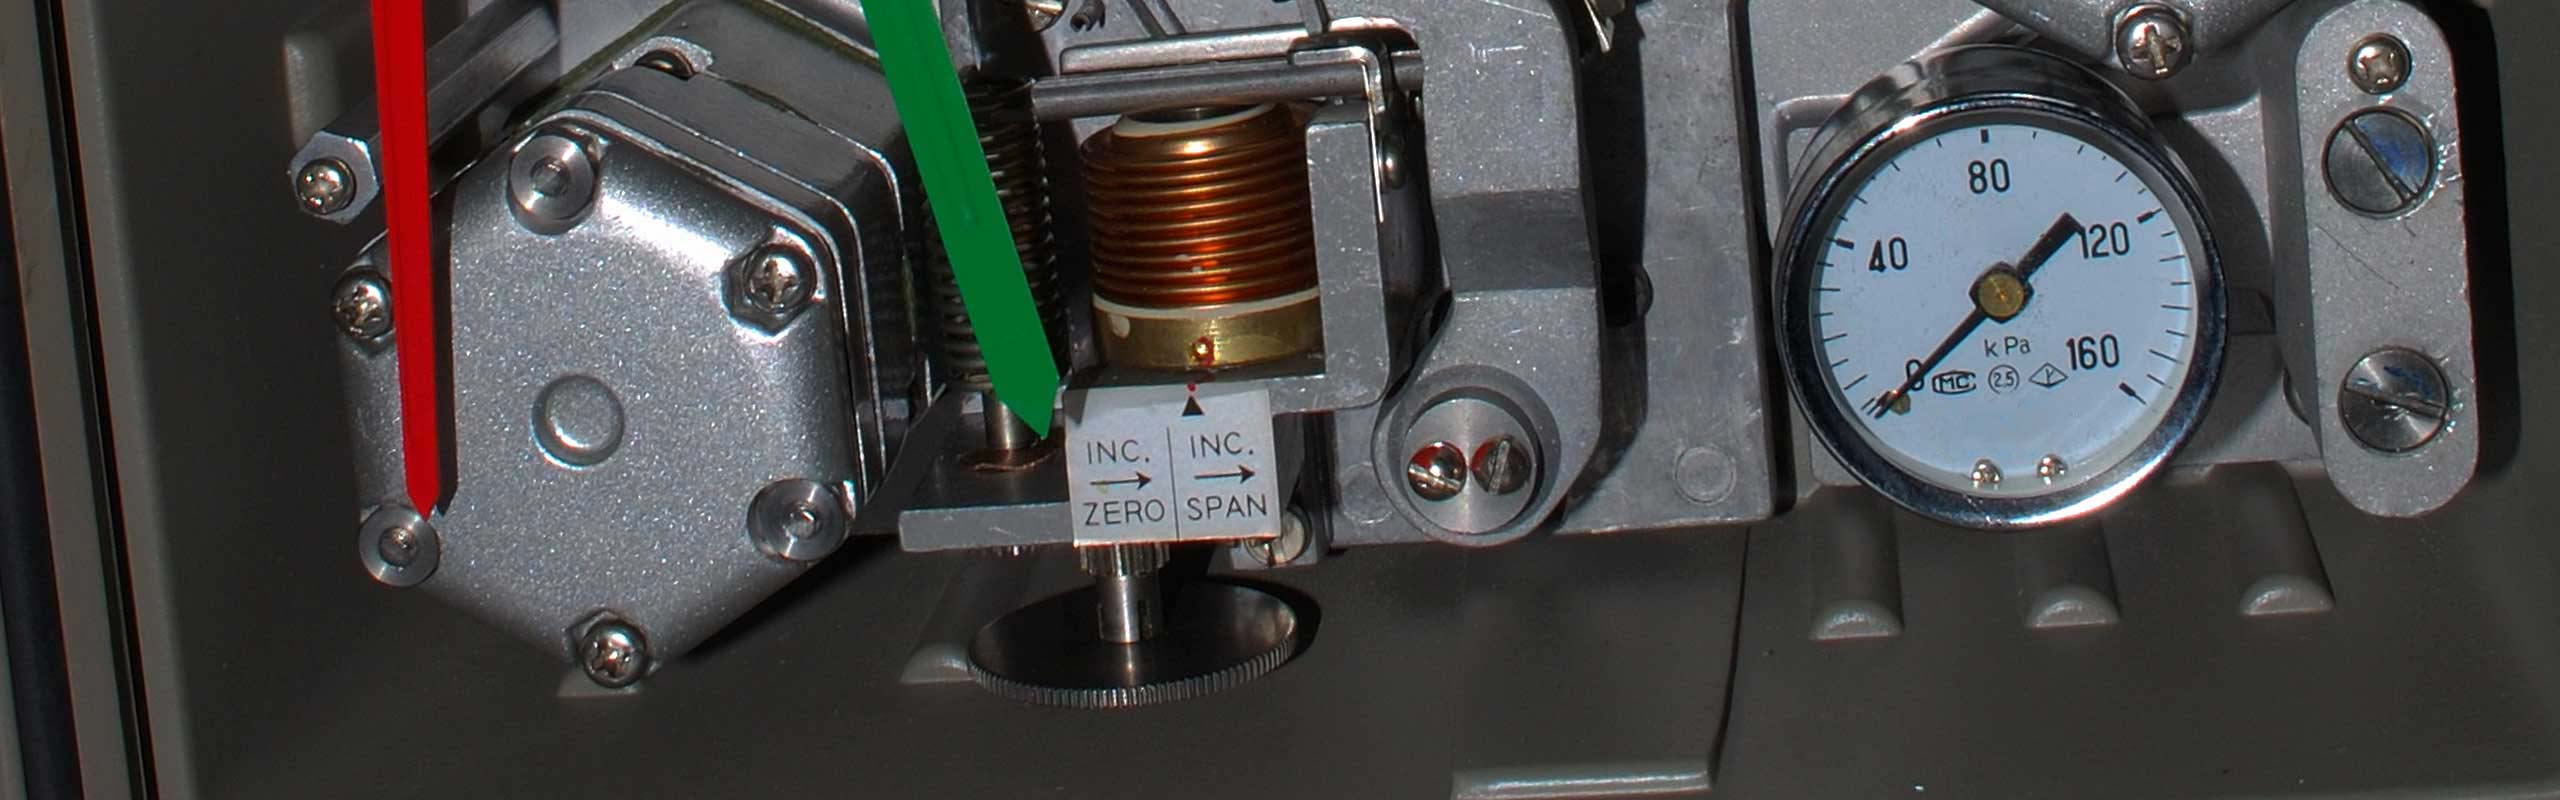 KDP 44 (Lowest Differential Pressure) Pneumatic Pressure Transmitter